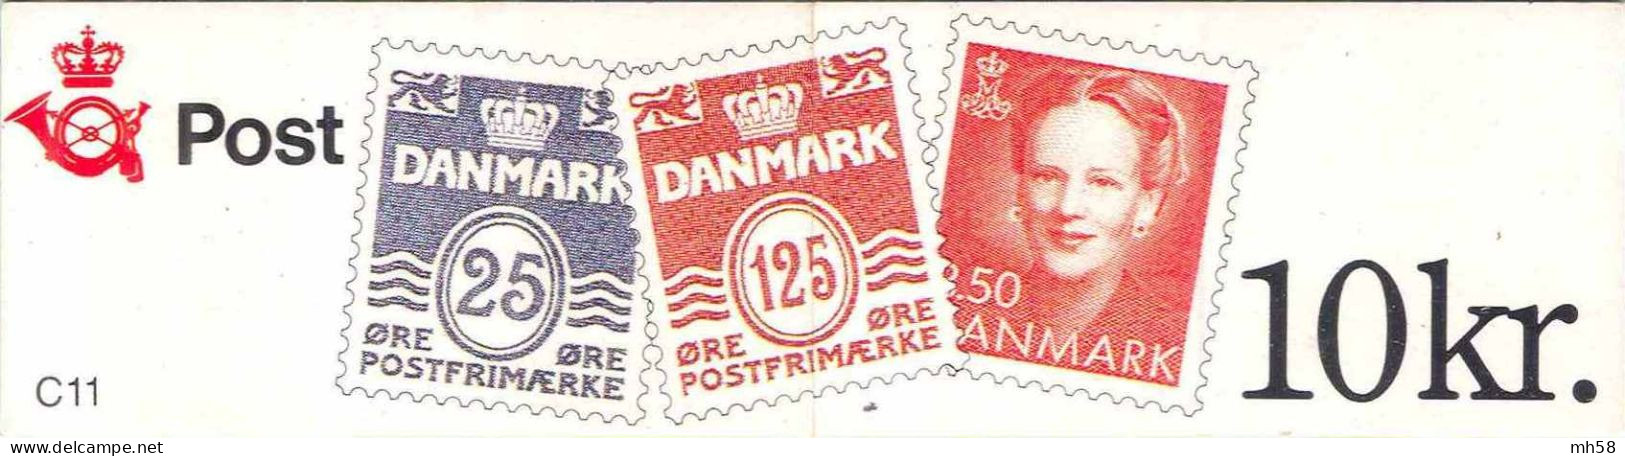 DANEMARK 1991 - Carnet / Booklet / MH Indice C11 - 10 Kr Chiffres / Reine Margarethe - YT C 976 I / MI MH 43 - Libretti